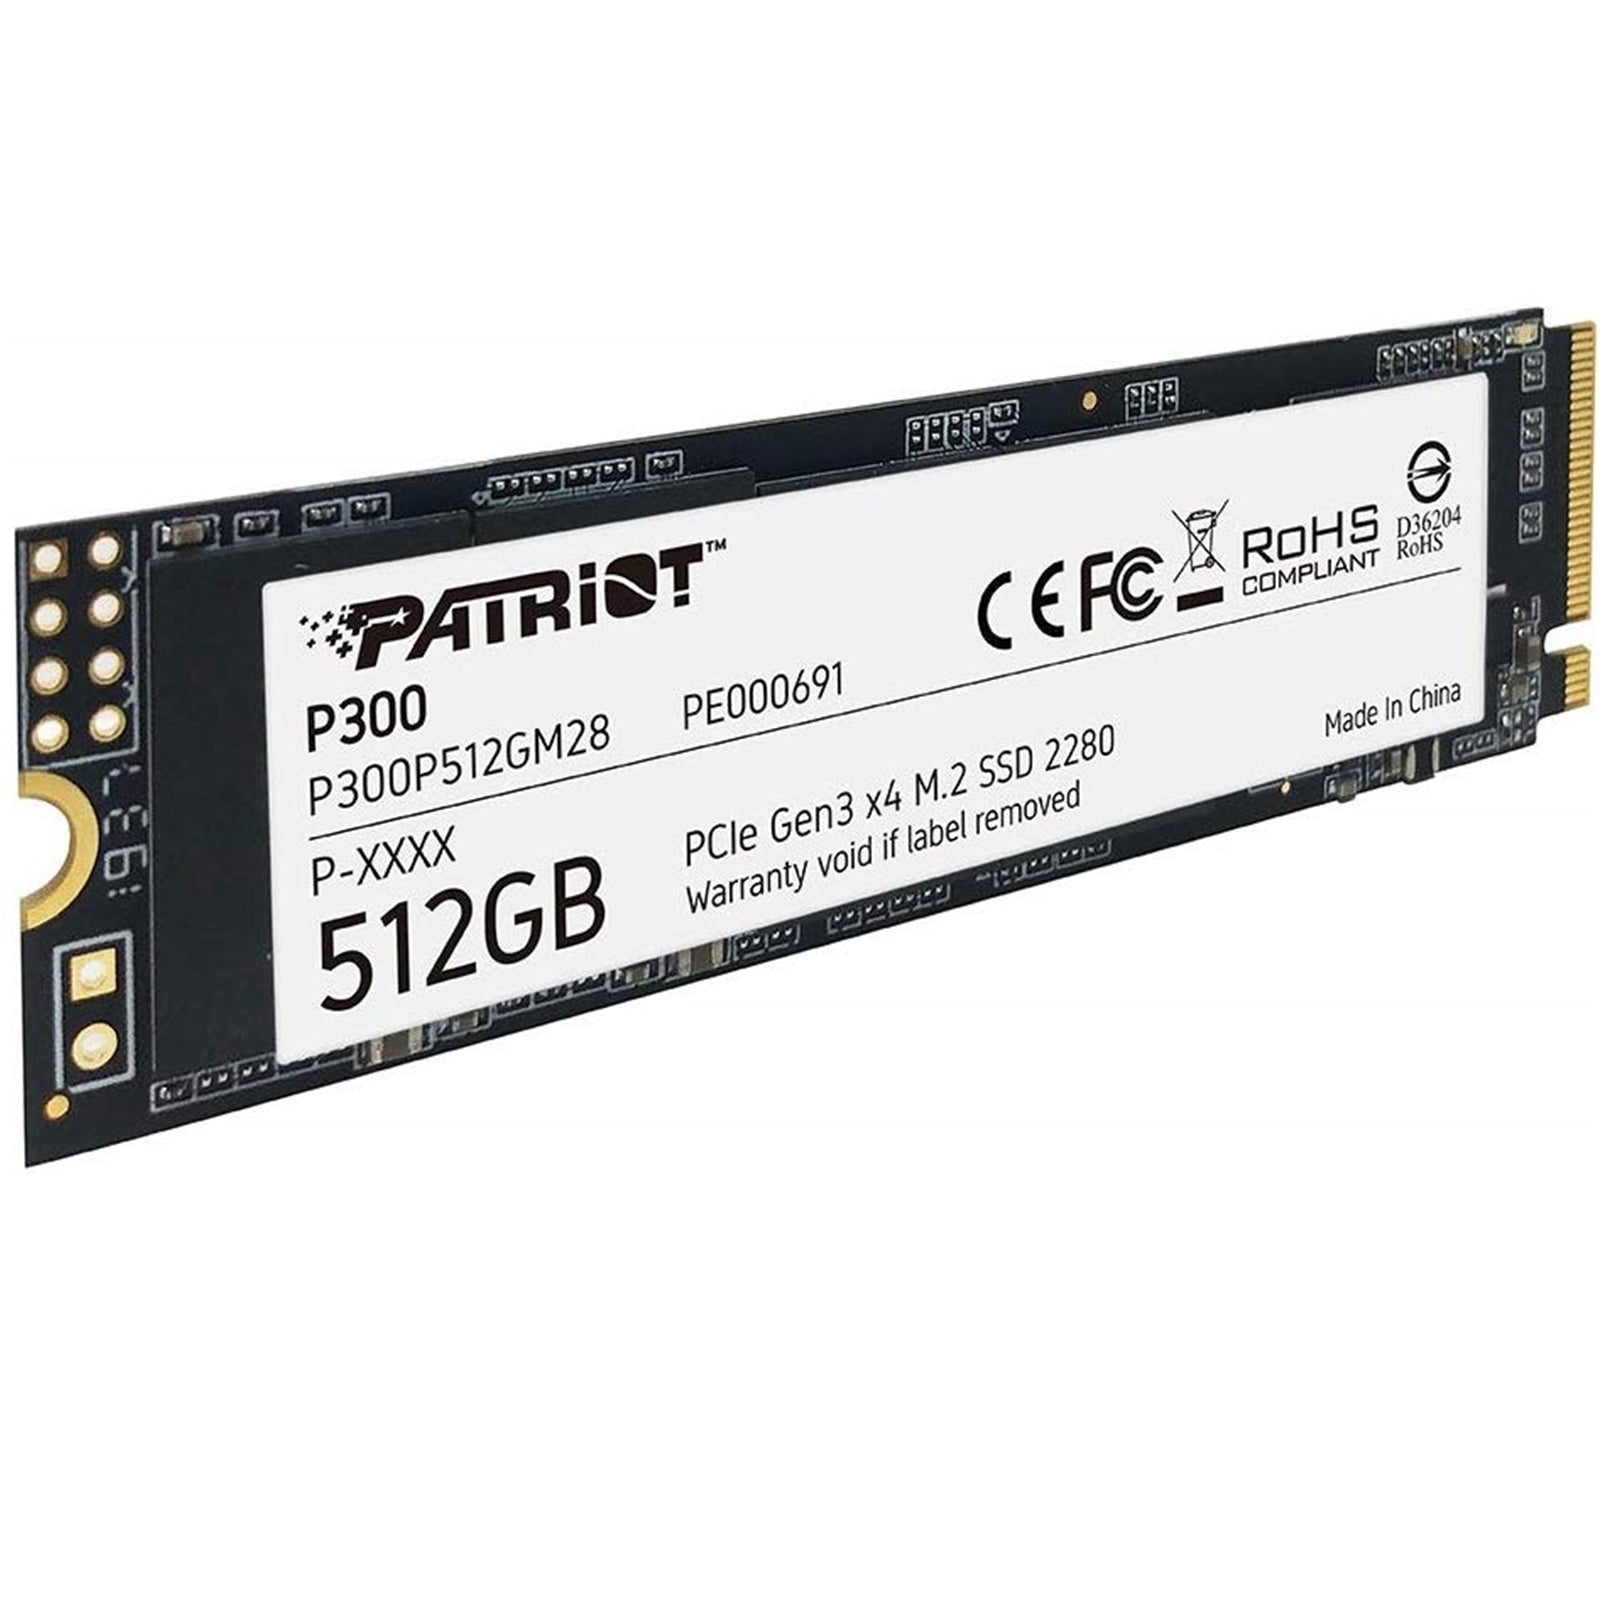 Patriot P300 High-Speed 512GB M.2 NVMe SSD Enhanced Performance & Reliability